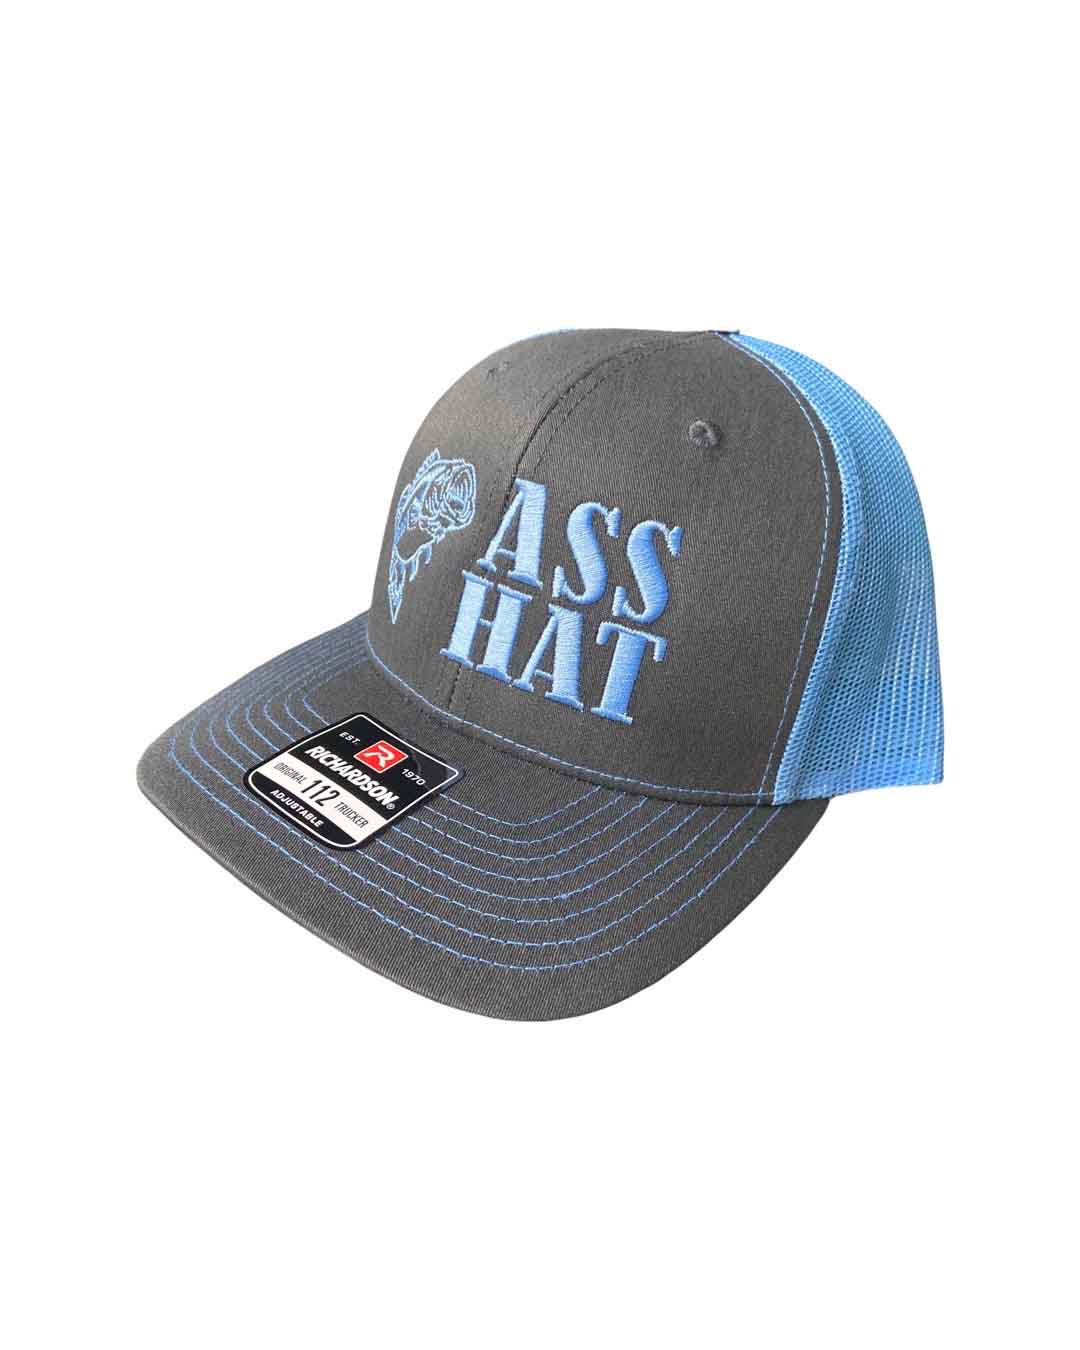 Ass Hat 112 Richardson